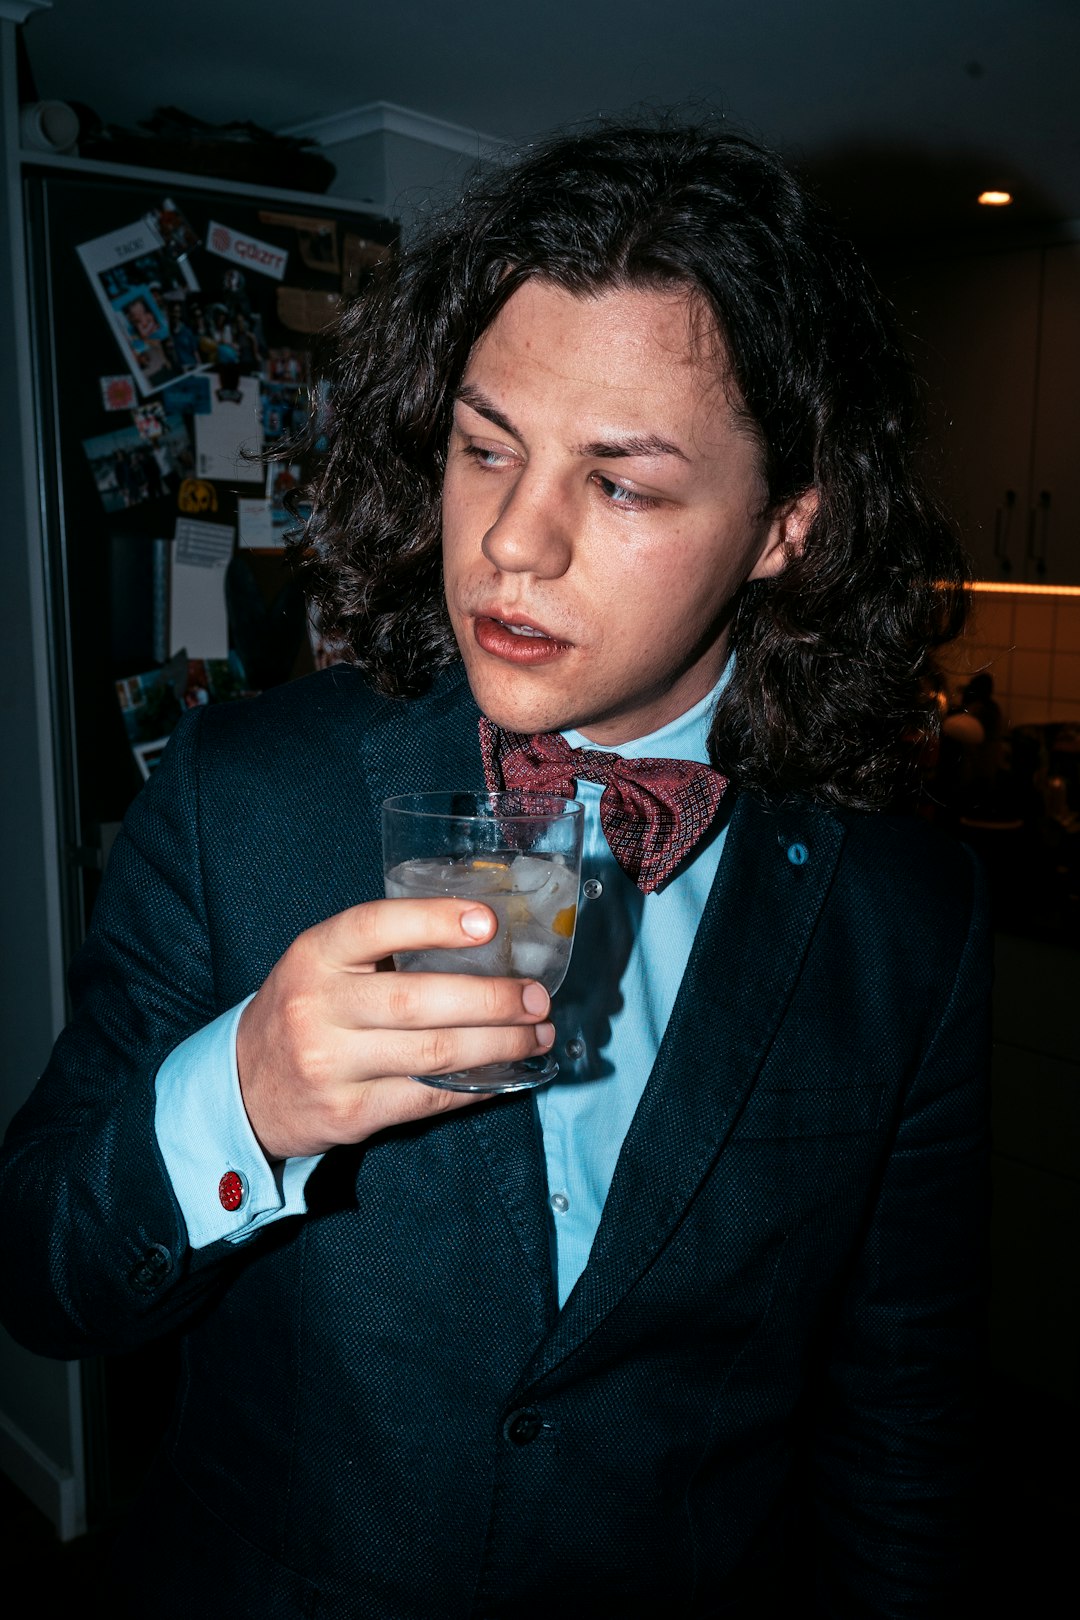 woman in blue blazer holding drinking glass